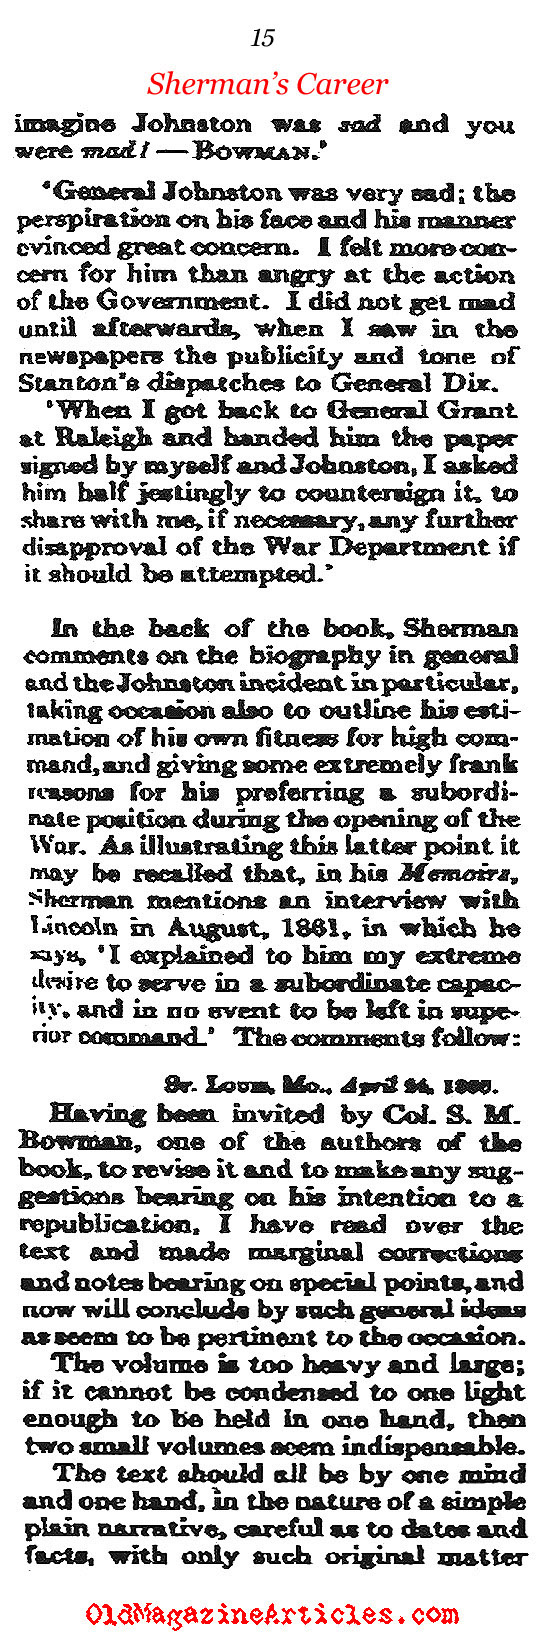 General Sherman Recalls His War Record (The Atlantic Monthly, 1911)